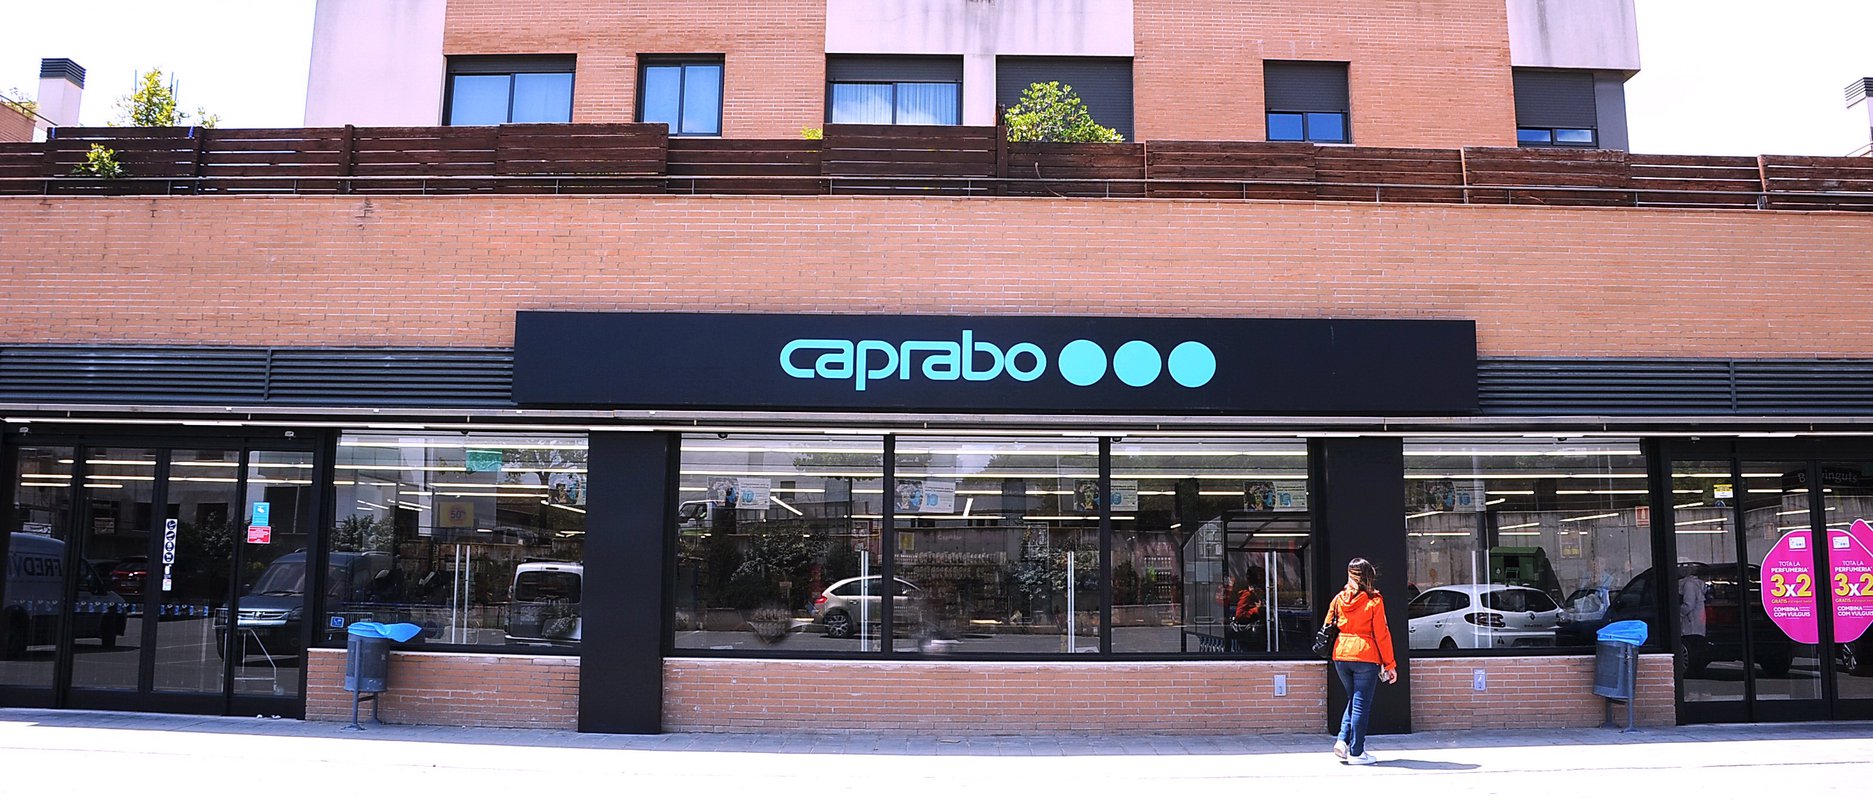 Caprabo abre un supermercado ‘Caprabo rapid’ en Tarragona